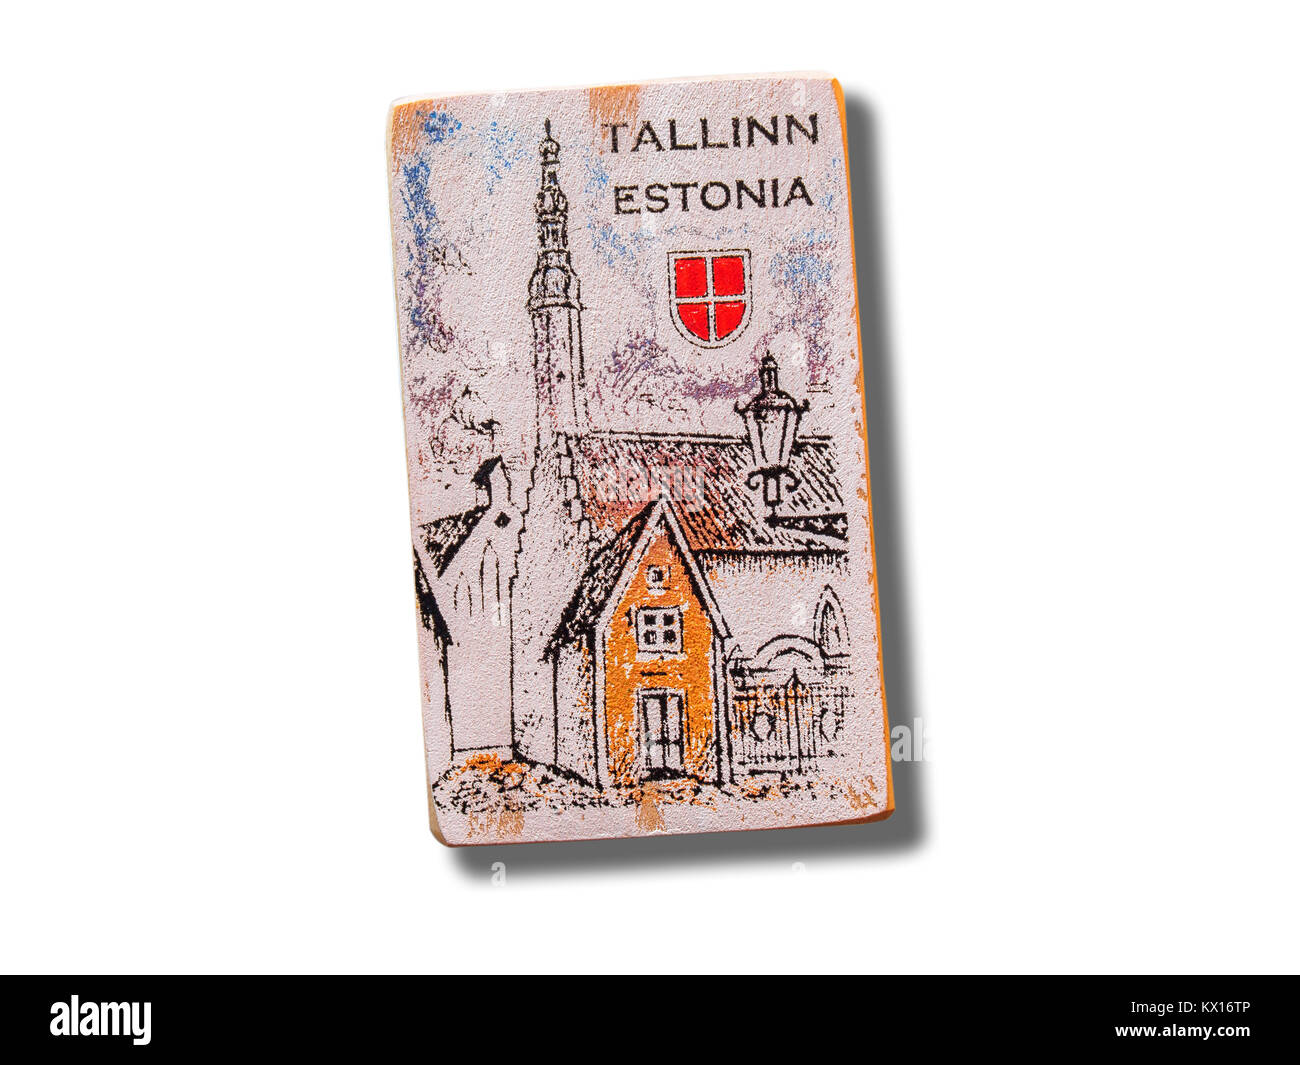 Tallinn (Estonia) souvenir refrigerator magnet The Good Soldier Svejk isolated on white background Stock Photo